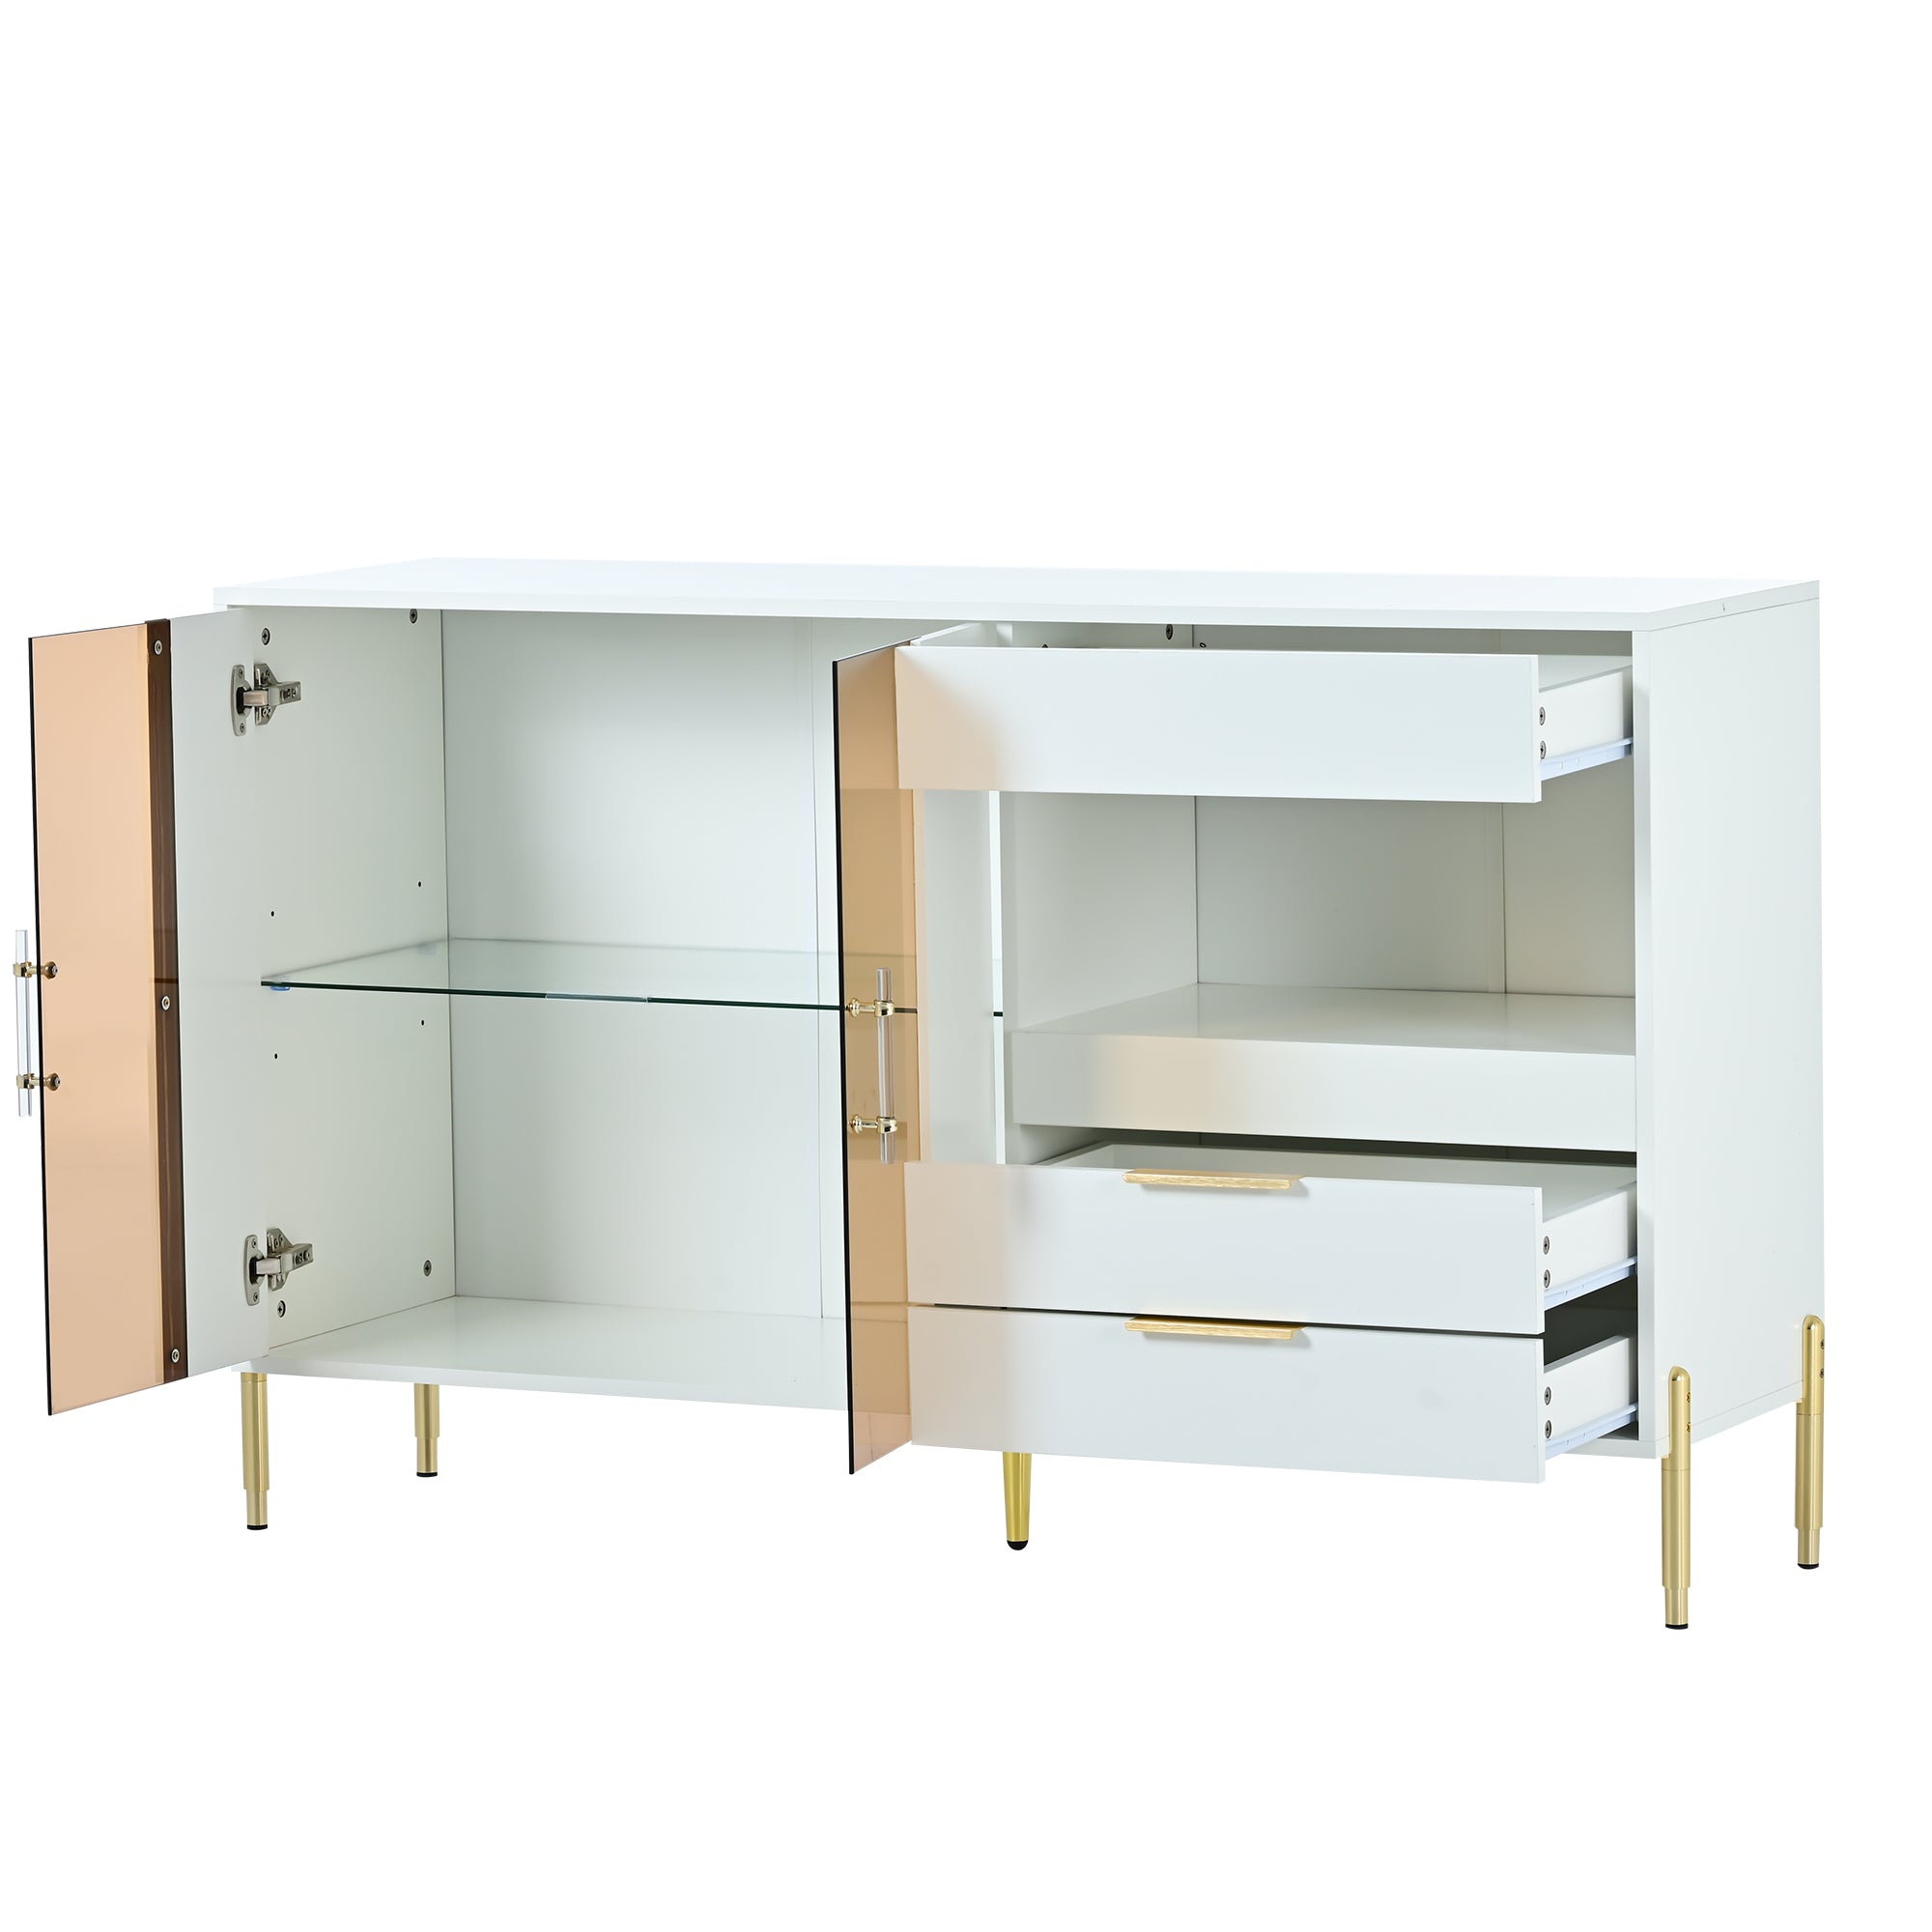 ZNTS U_Style Storage Cabinets with Acrylic Doors, Light Luxury Modern Storage Cabinets with Adjustable WF305892AAK